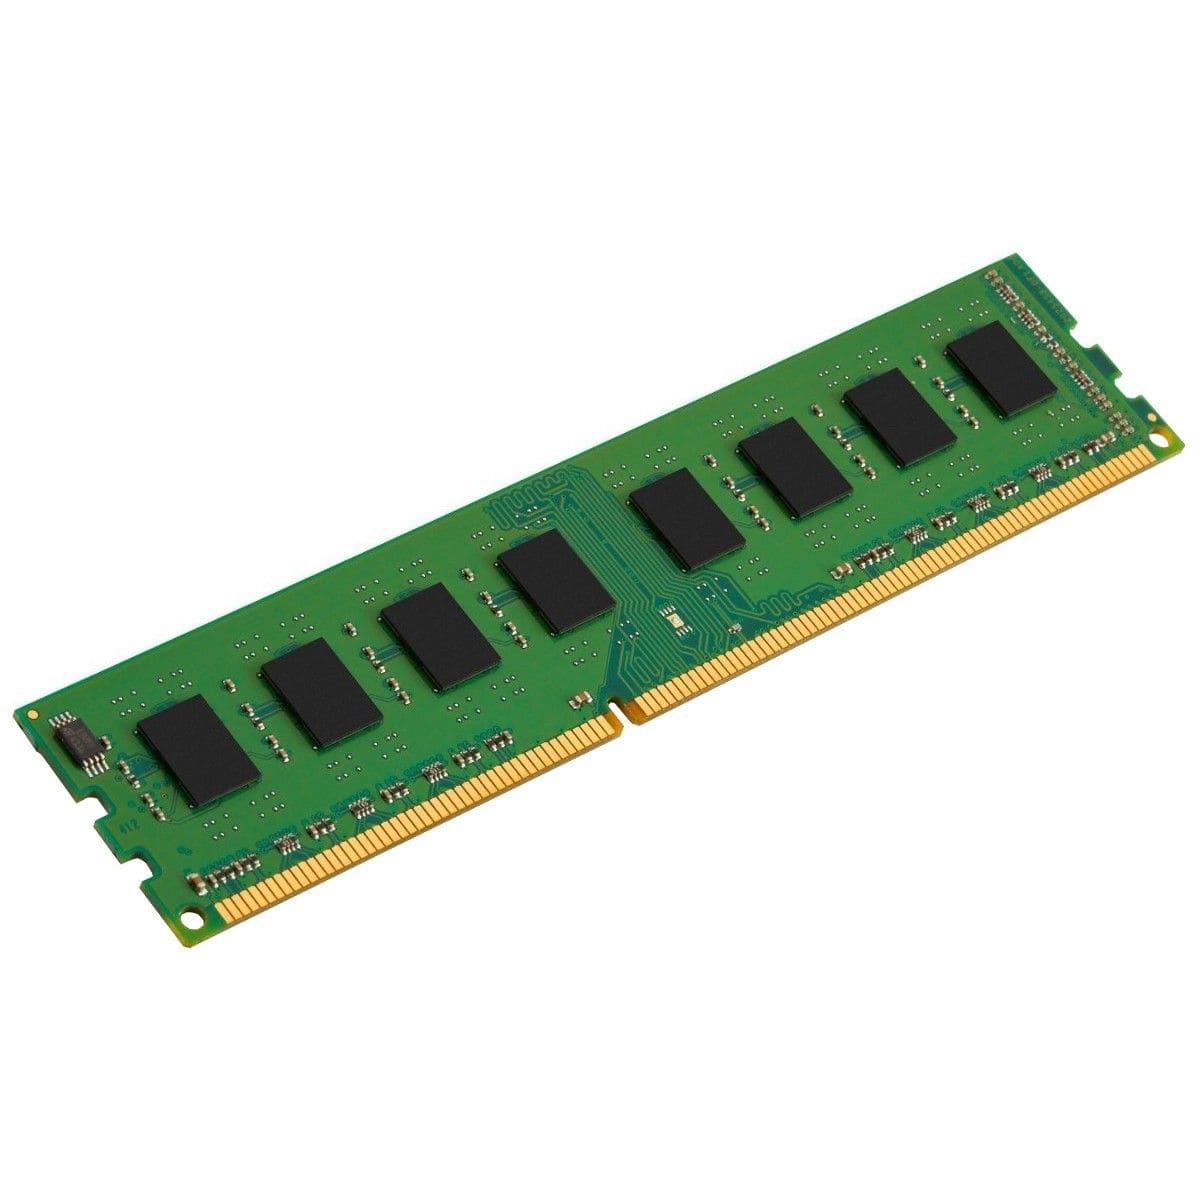 iMac 15L pamięć DDR3